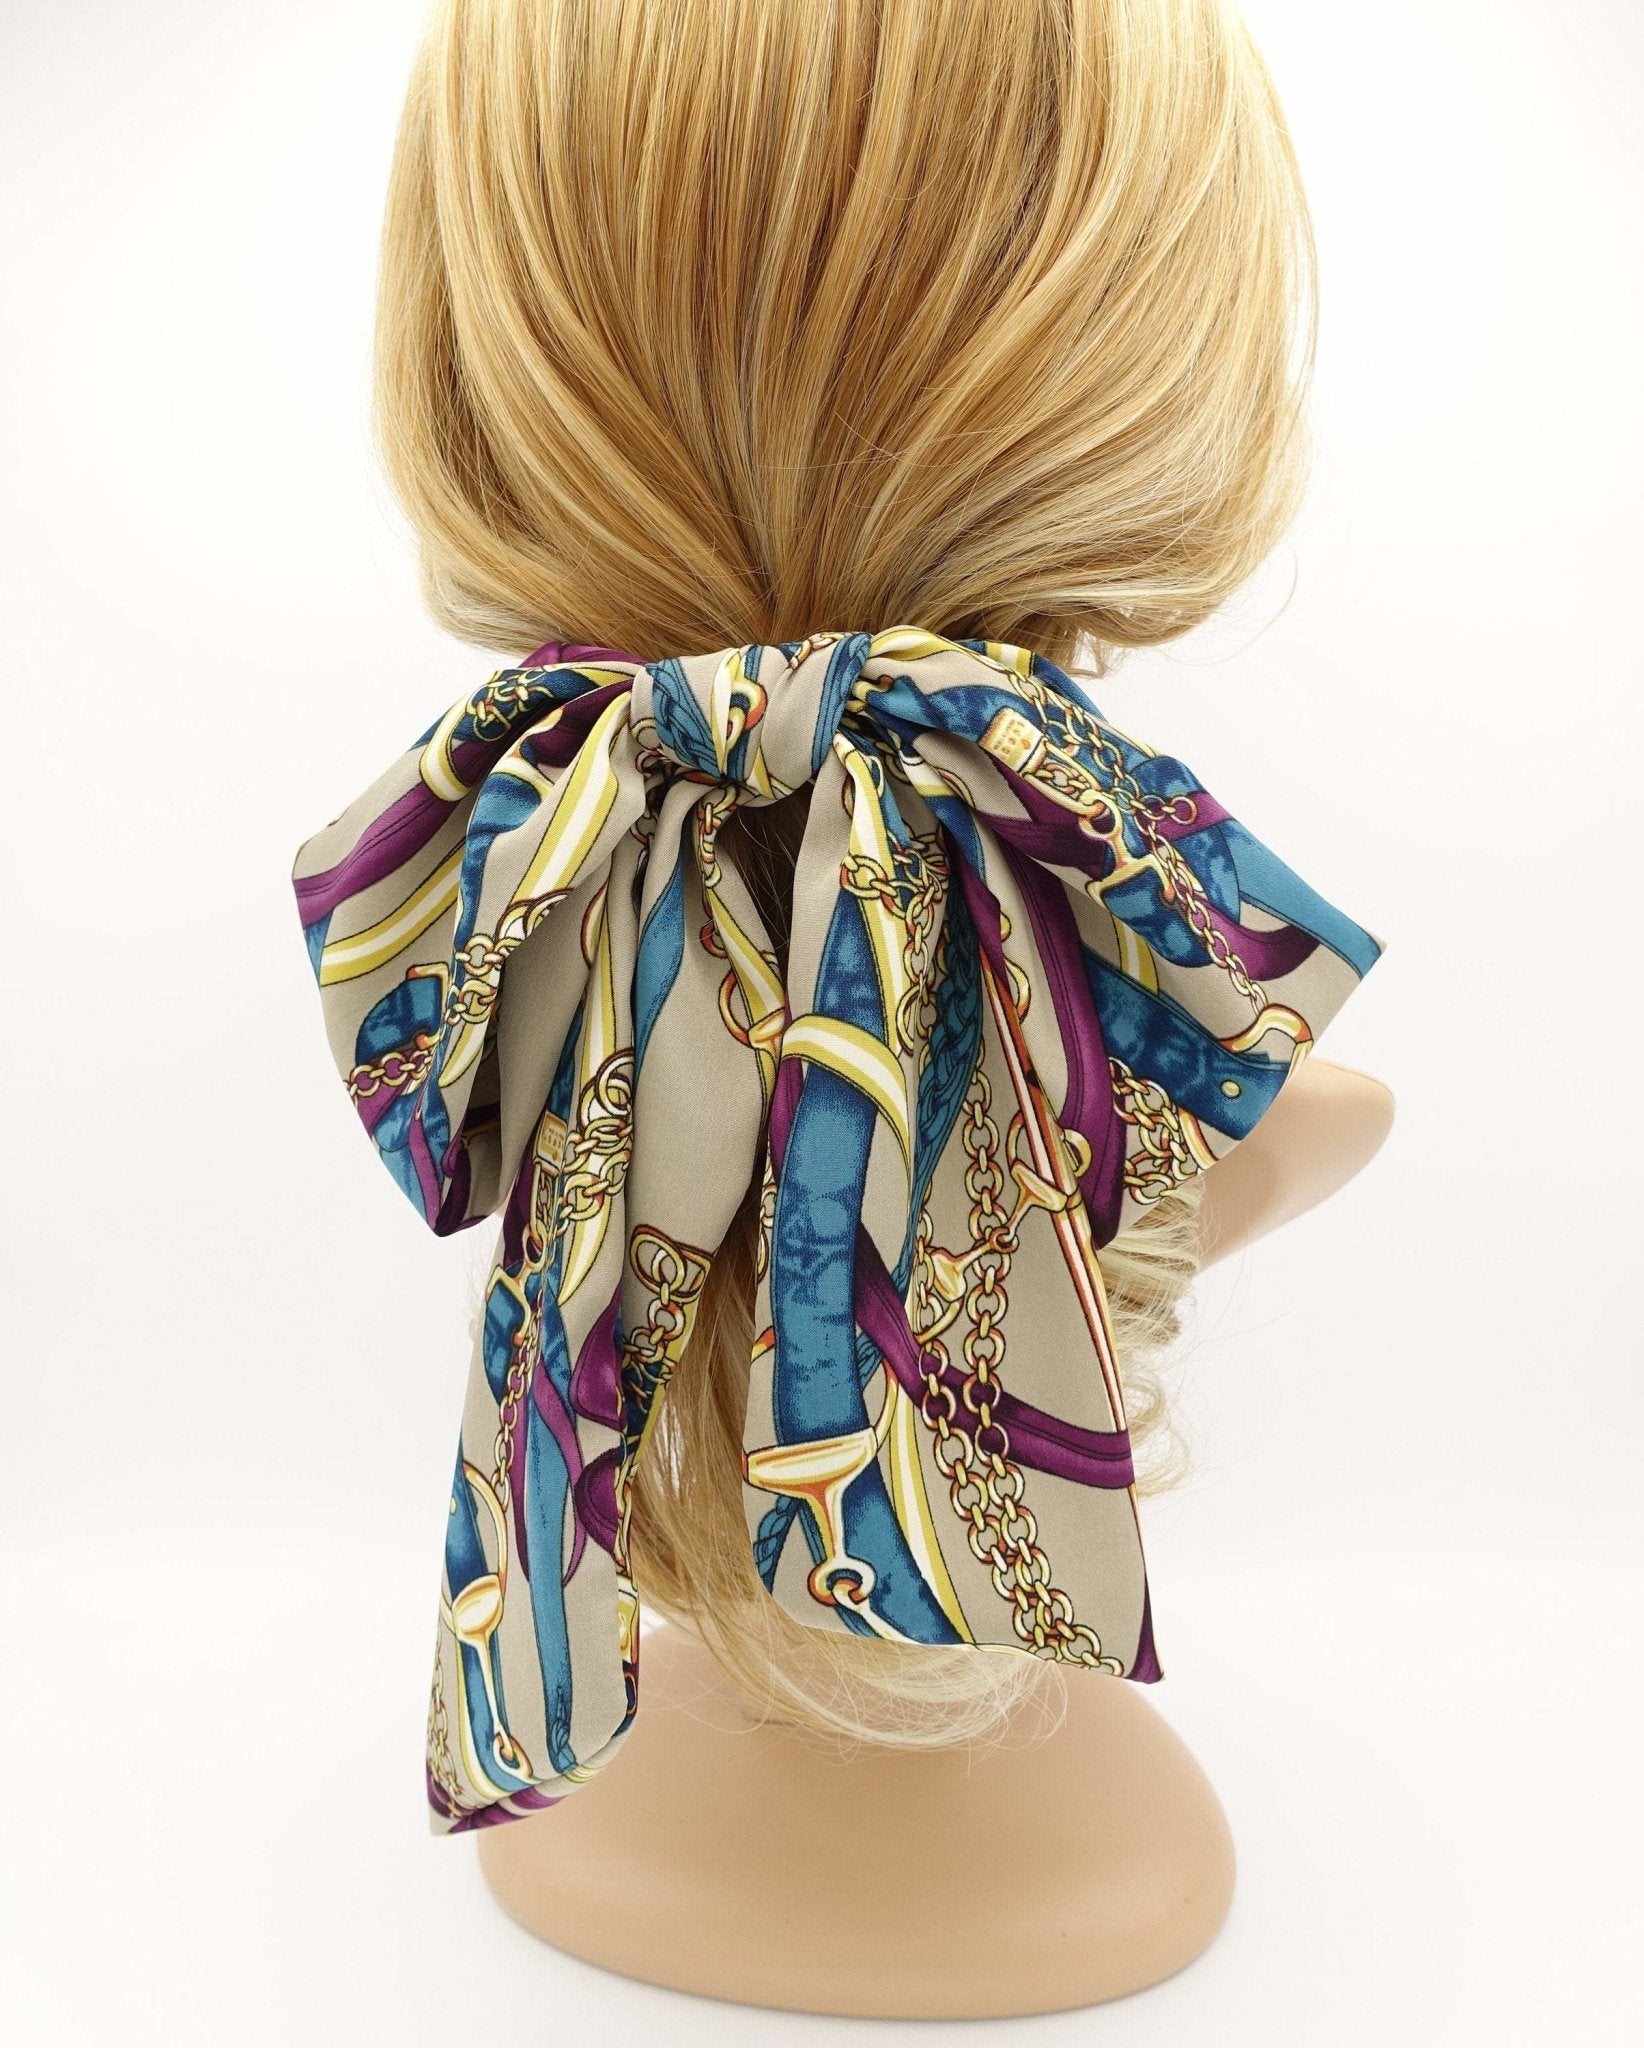 VeryShine belt chain print hair bow satin overesized bow french hair barrette women hair accessory